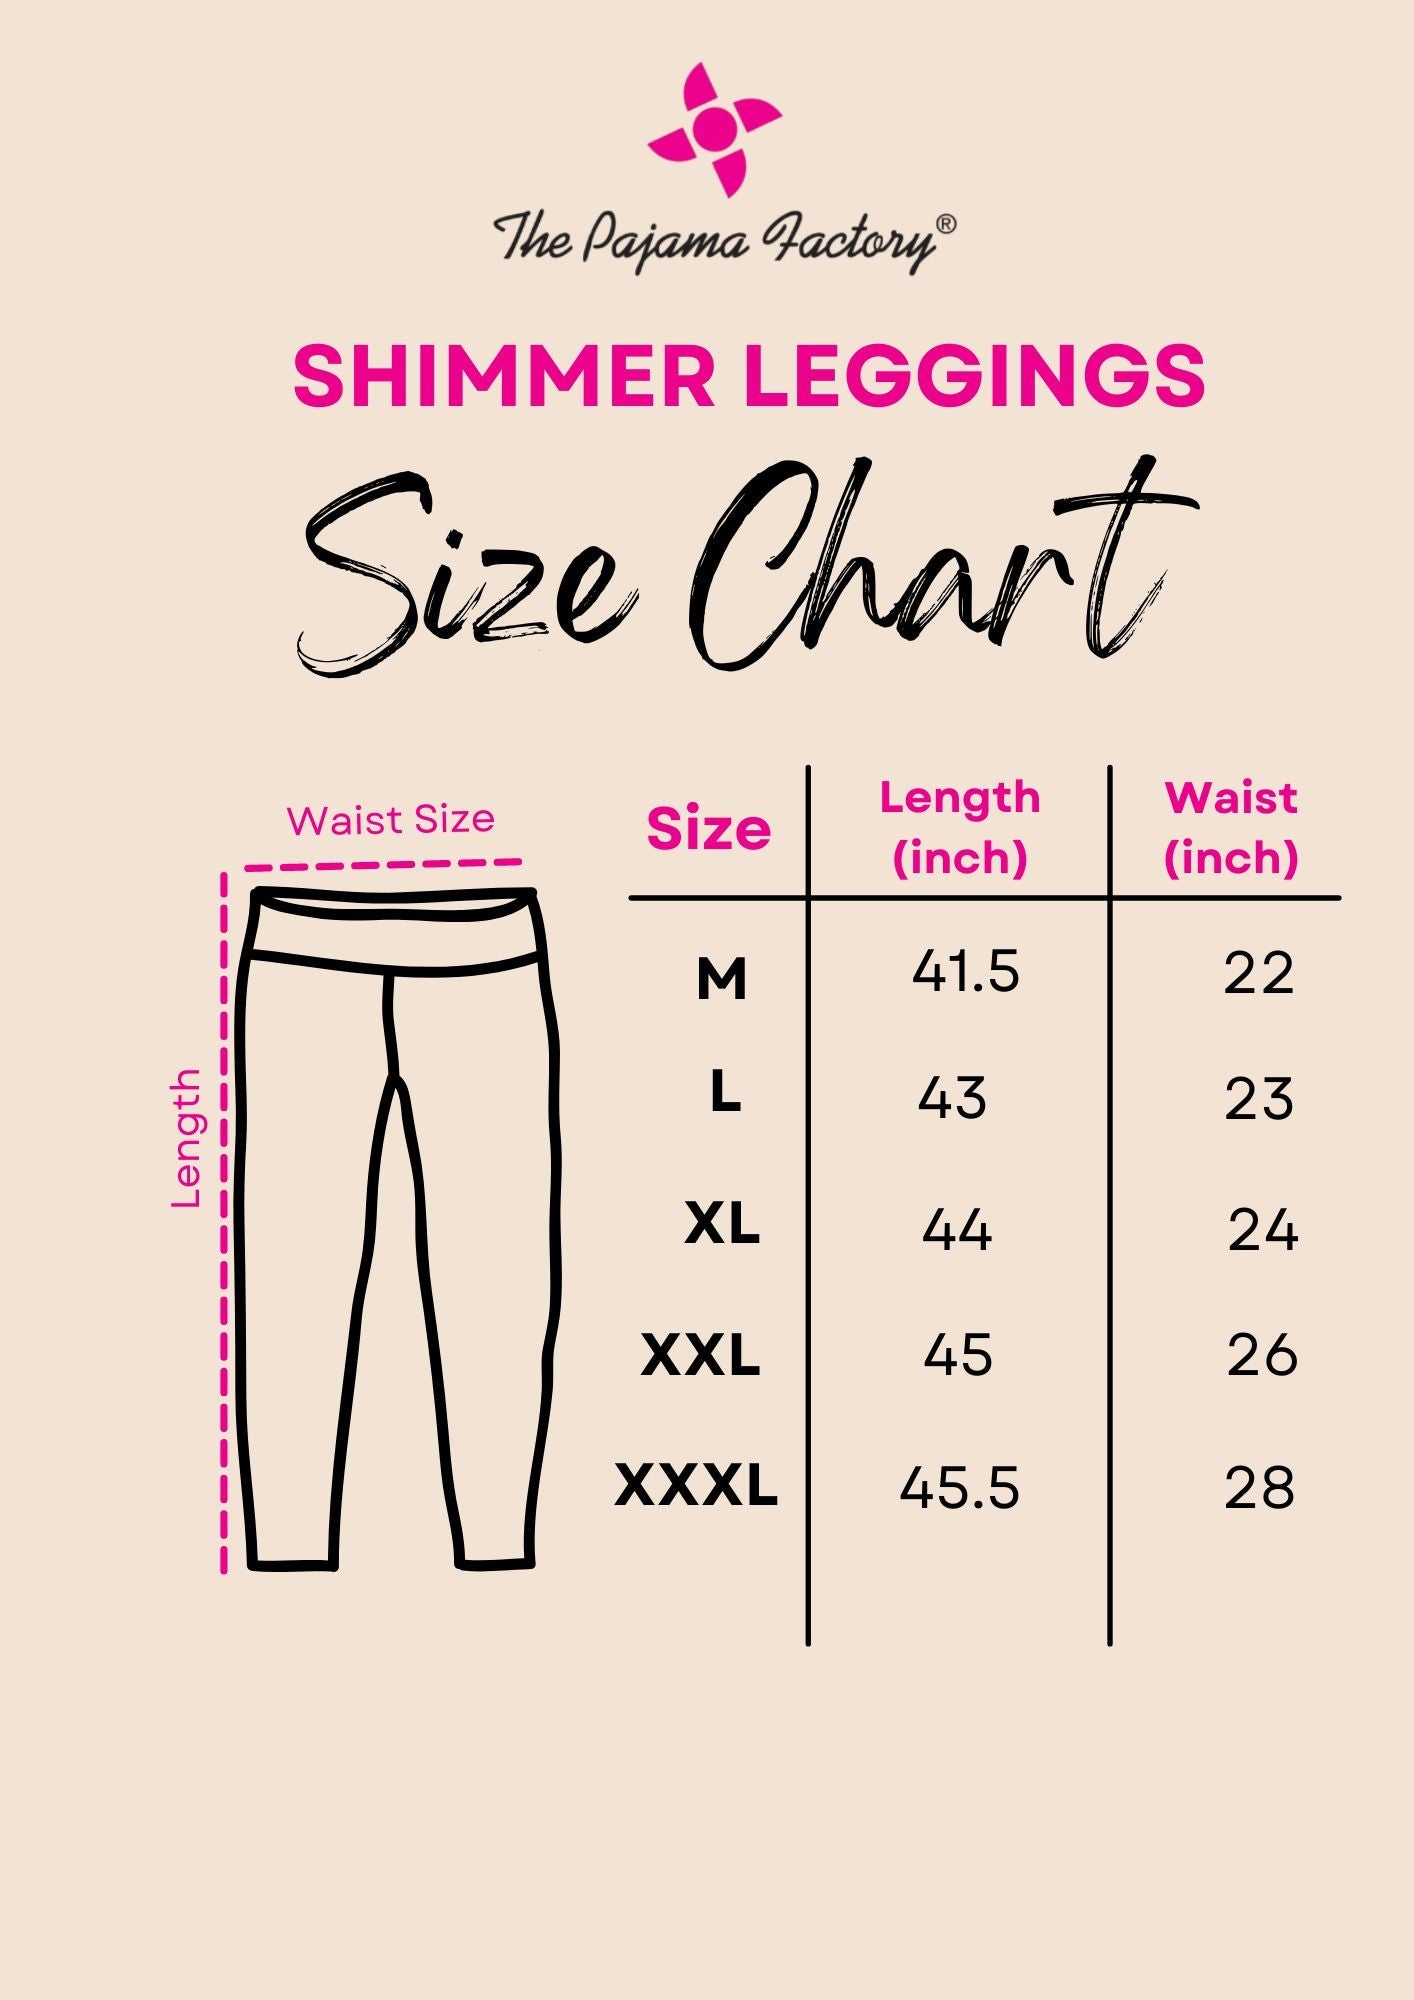 Buy The Pajama Factory Shimmer Legging Ankle Length Bottom Wear